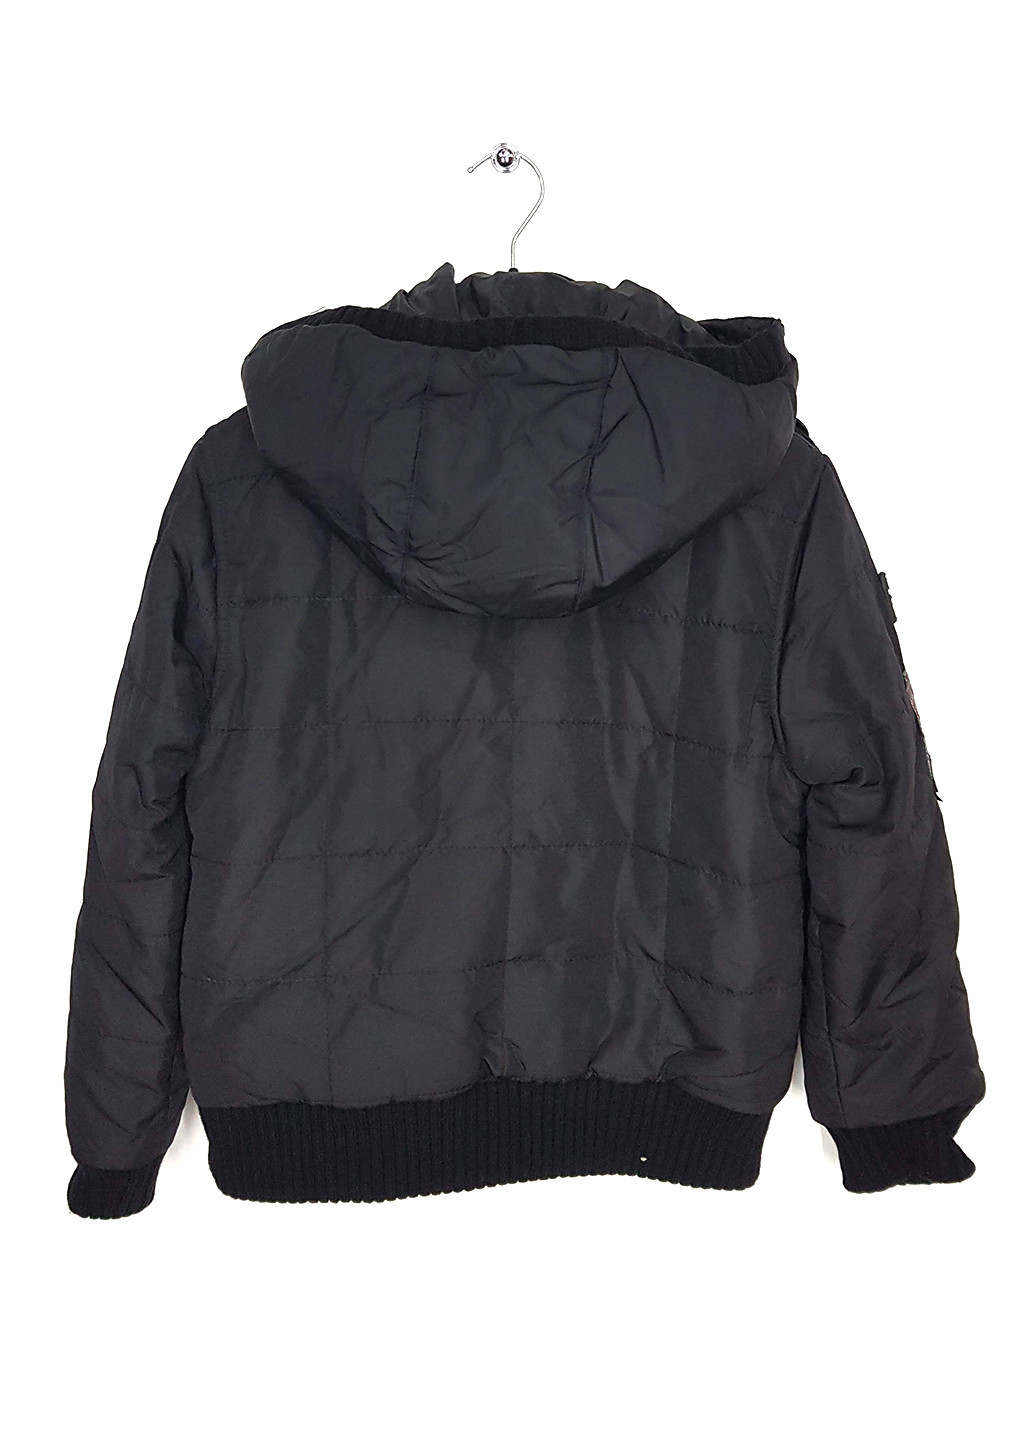 Черная зимняя куртка Puledro